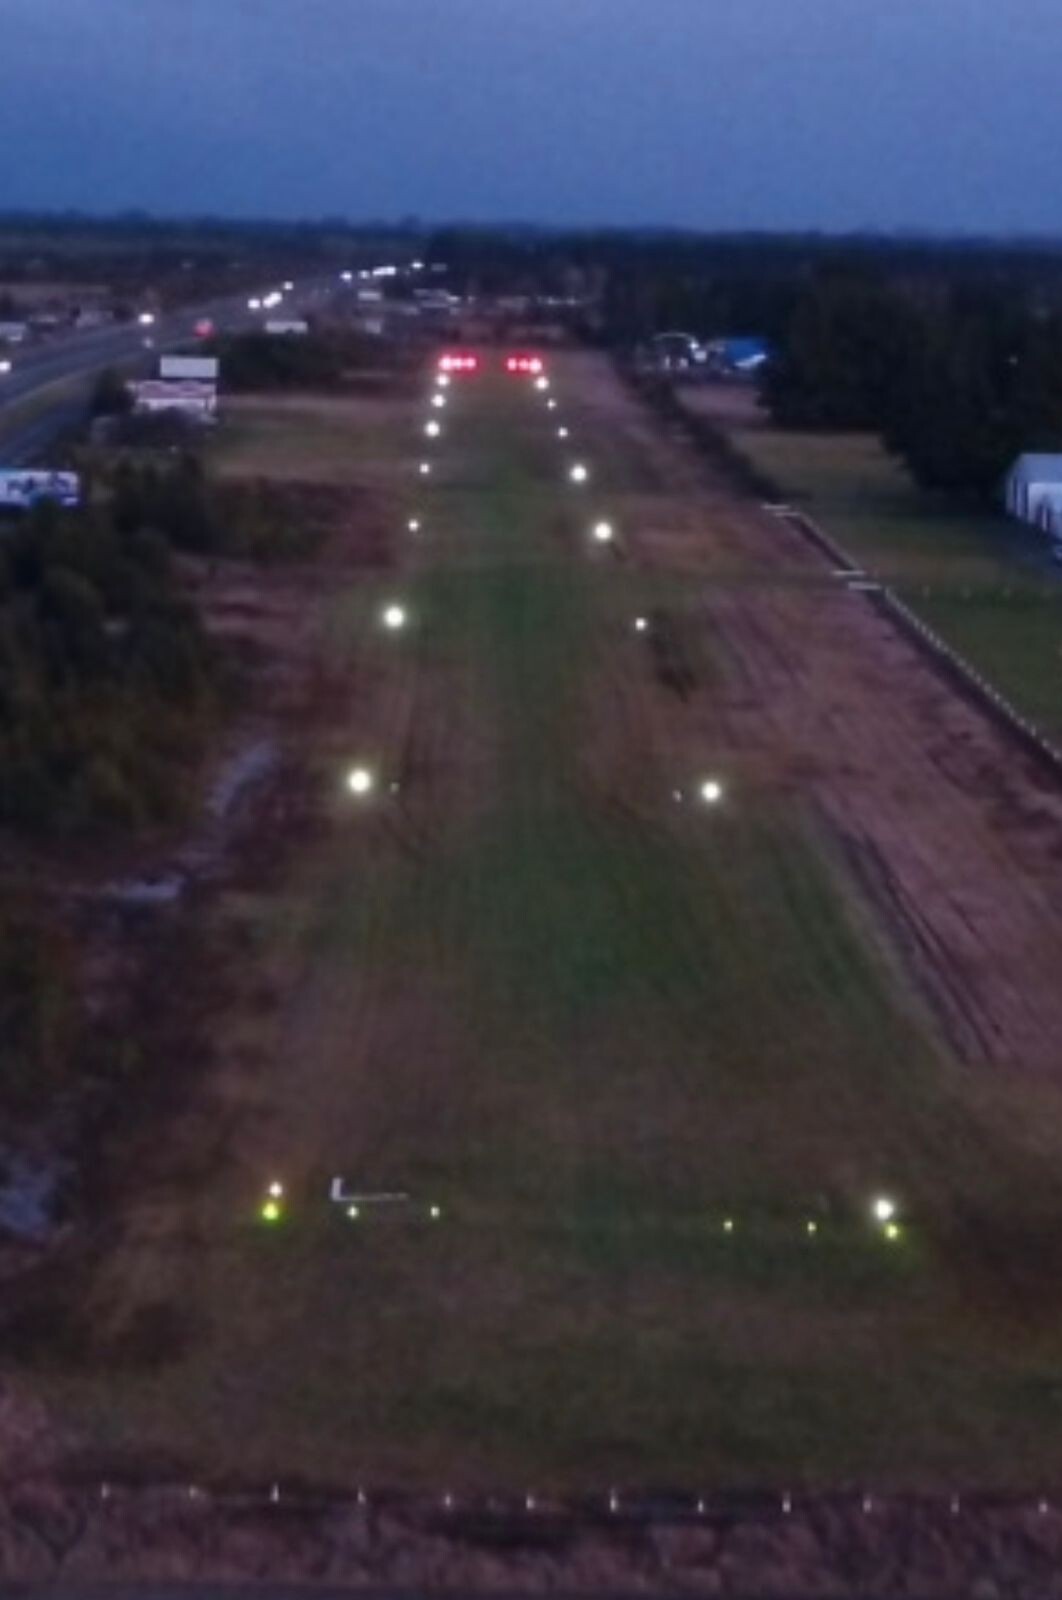 frutillar airport runway at night-time